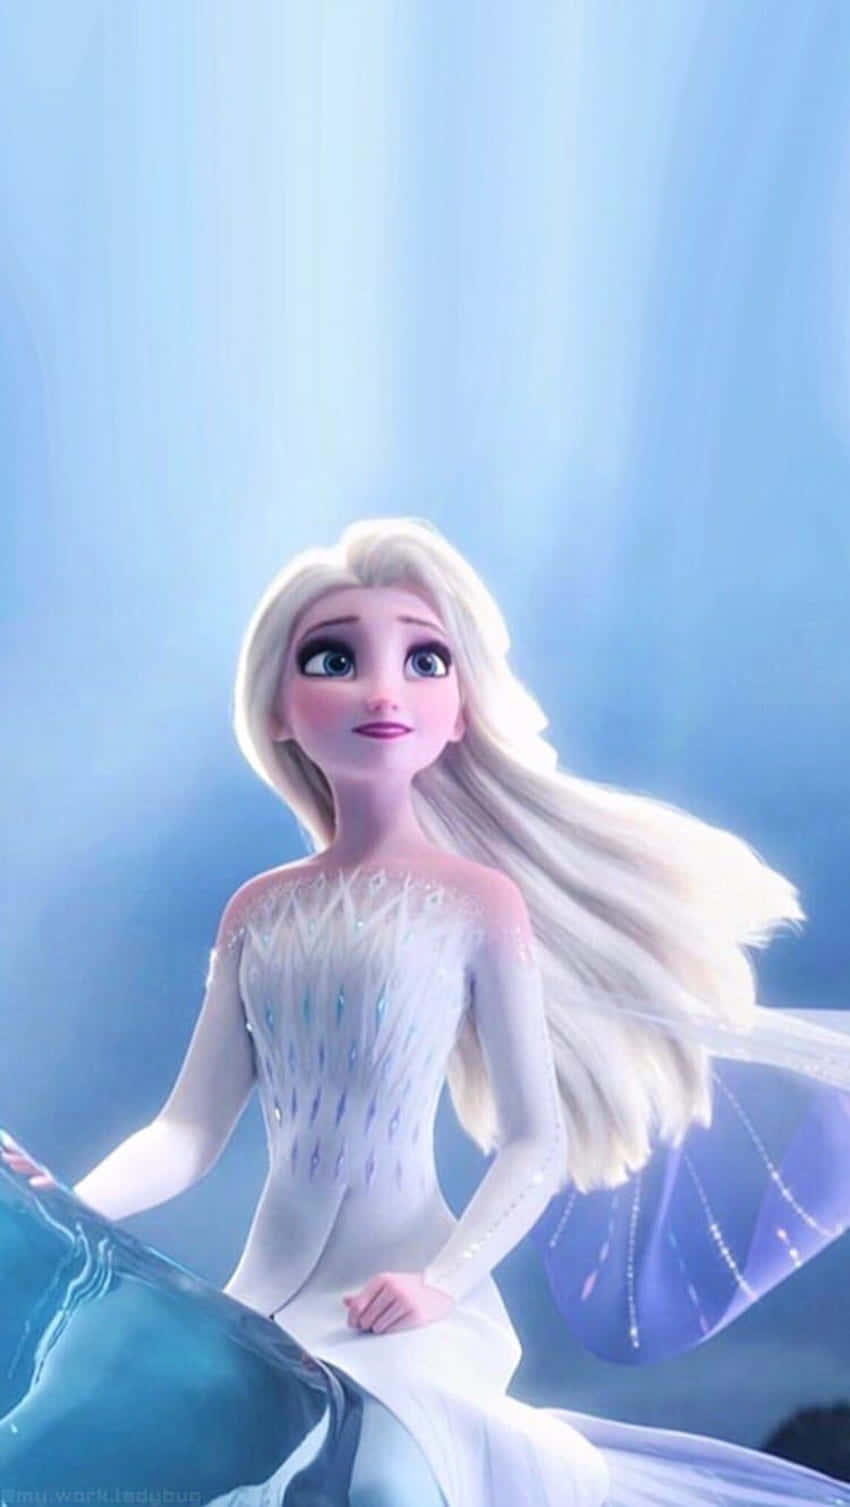 Beautiful Elsa in a Stunning White Dress Wallpaper